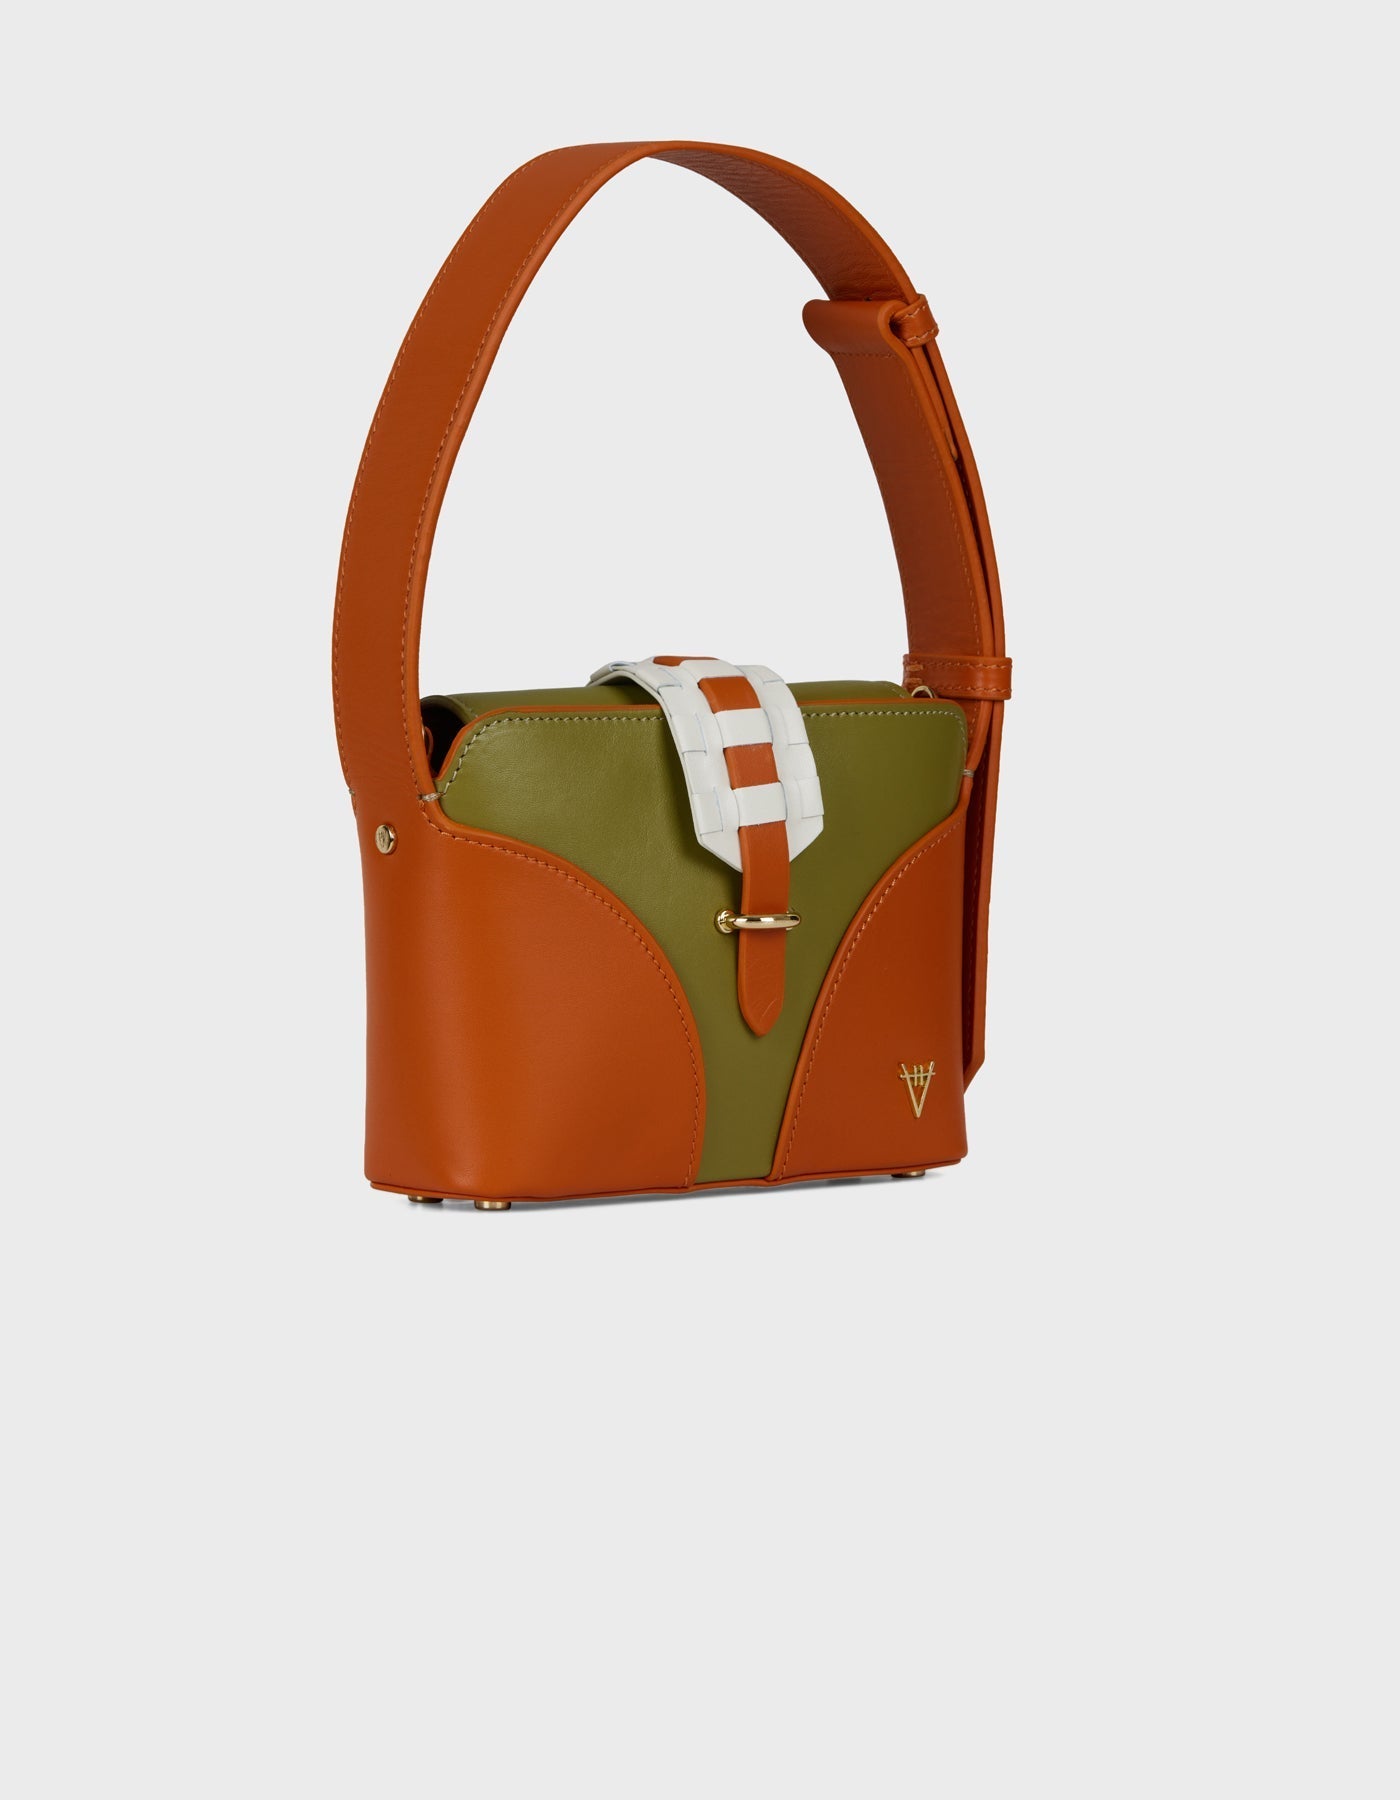 HiVa Atelier | Luna Shoulder Bag Burnt Orange & Olive & Bone | Beautiful and Versatile